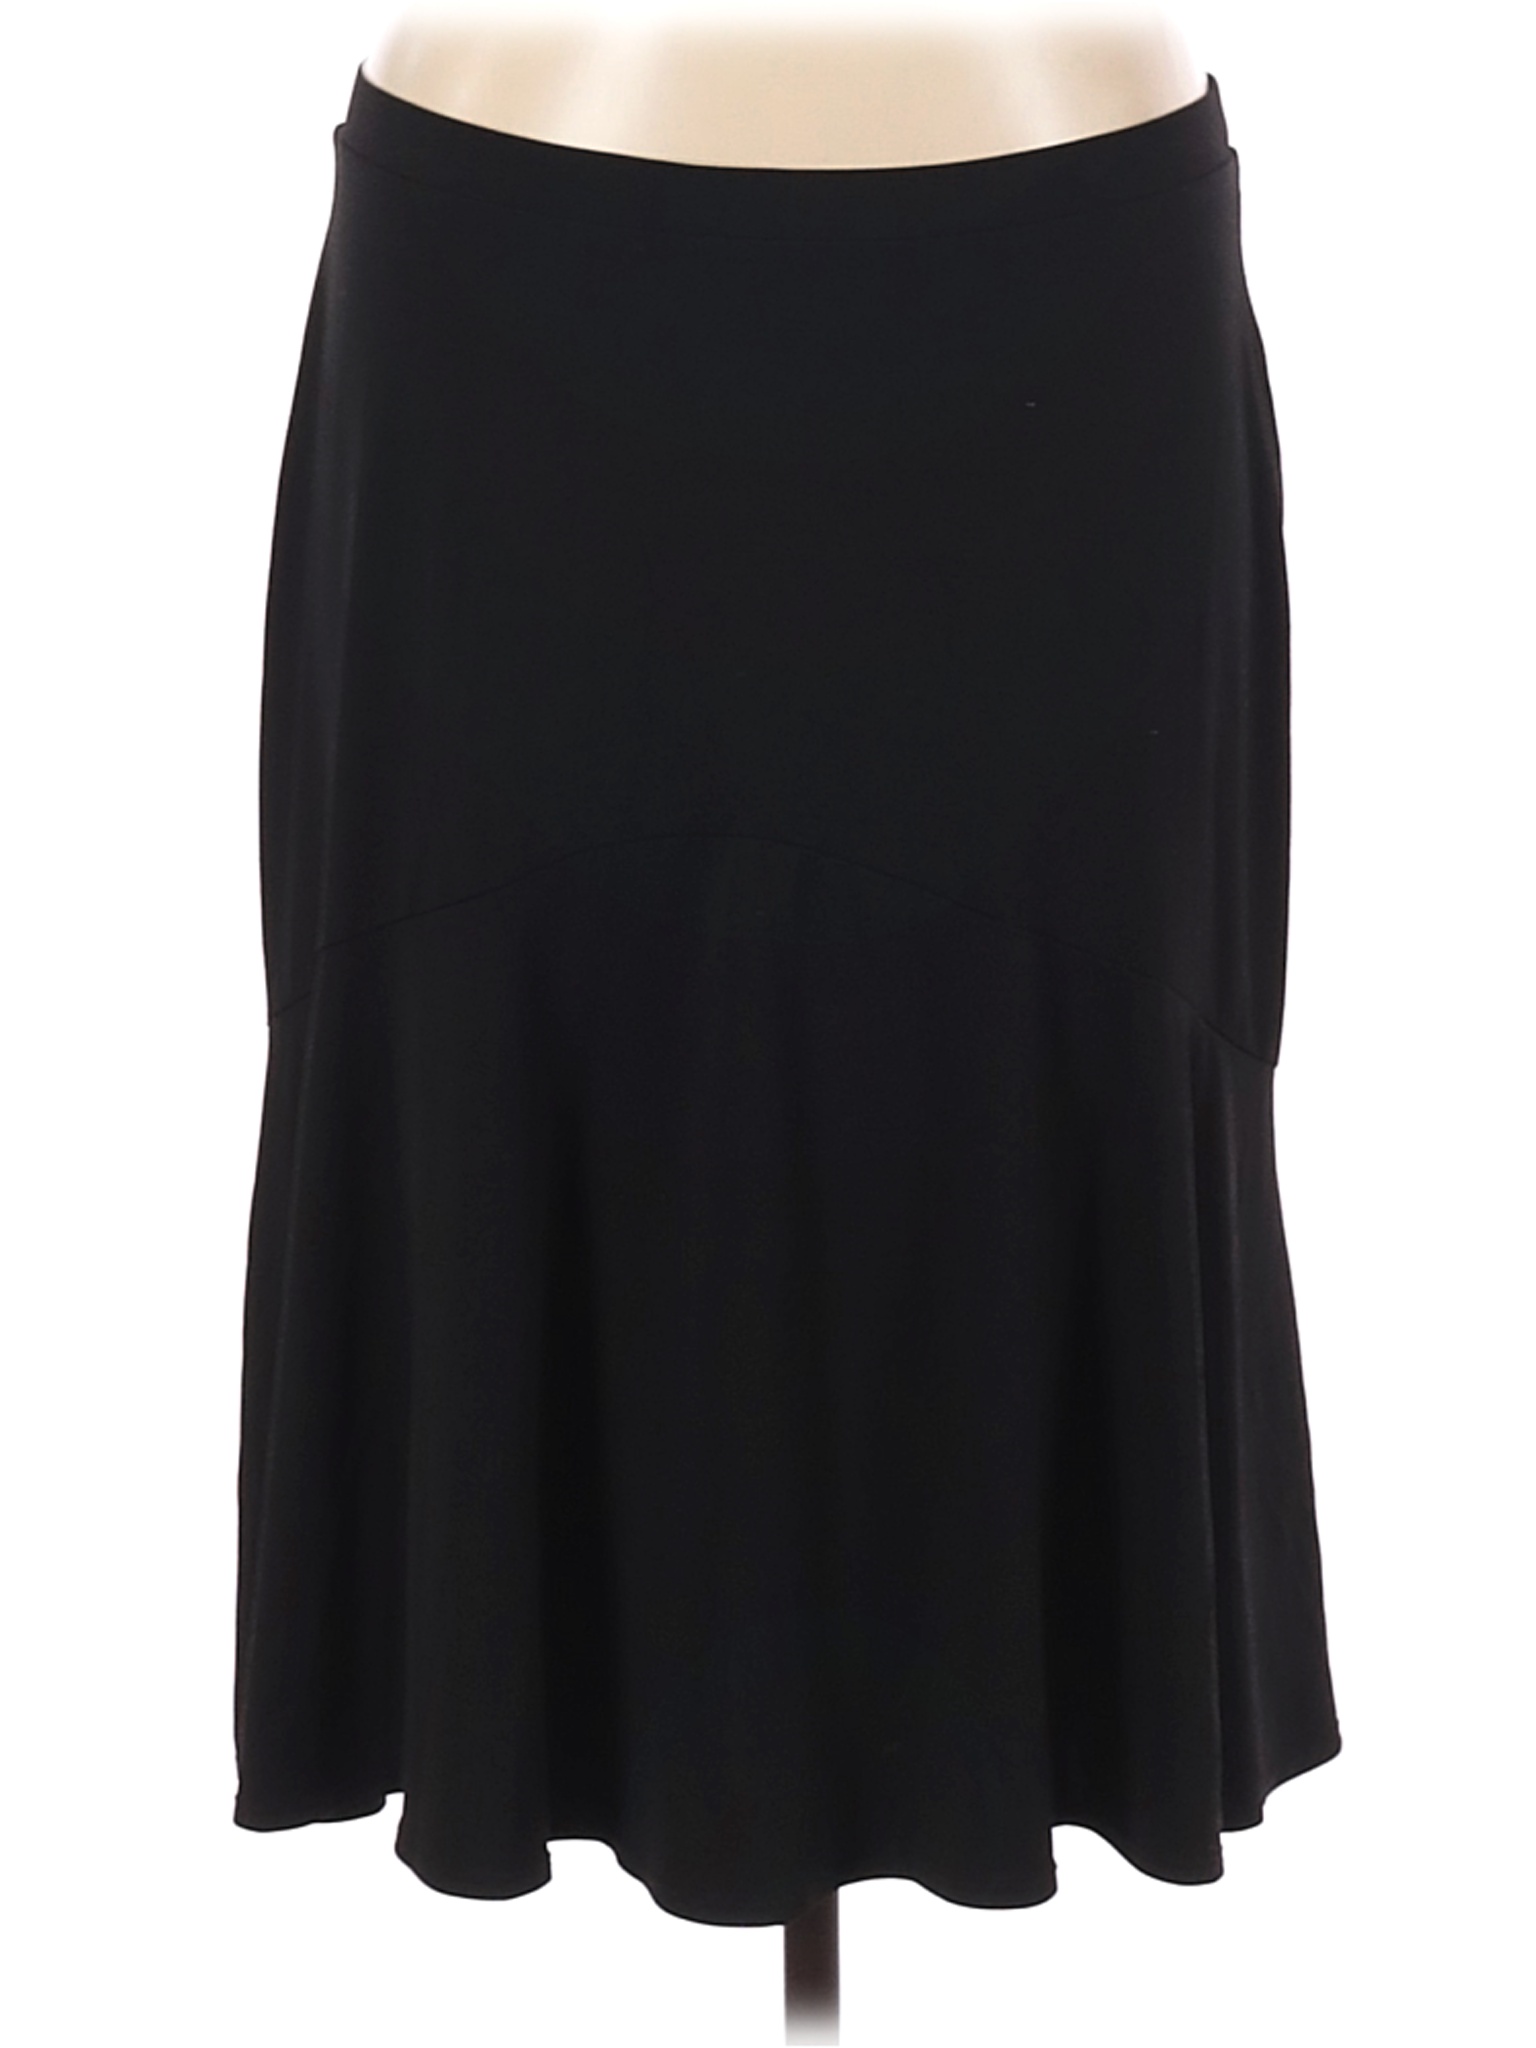 George Women Black Casual Skirt M | eBay